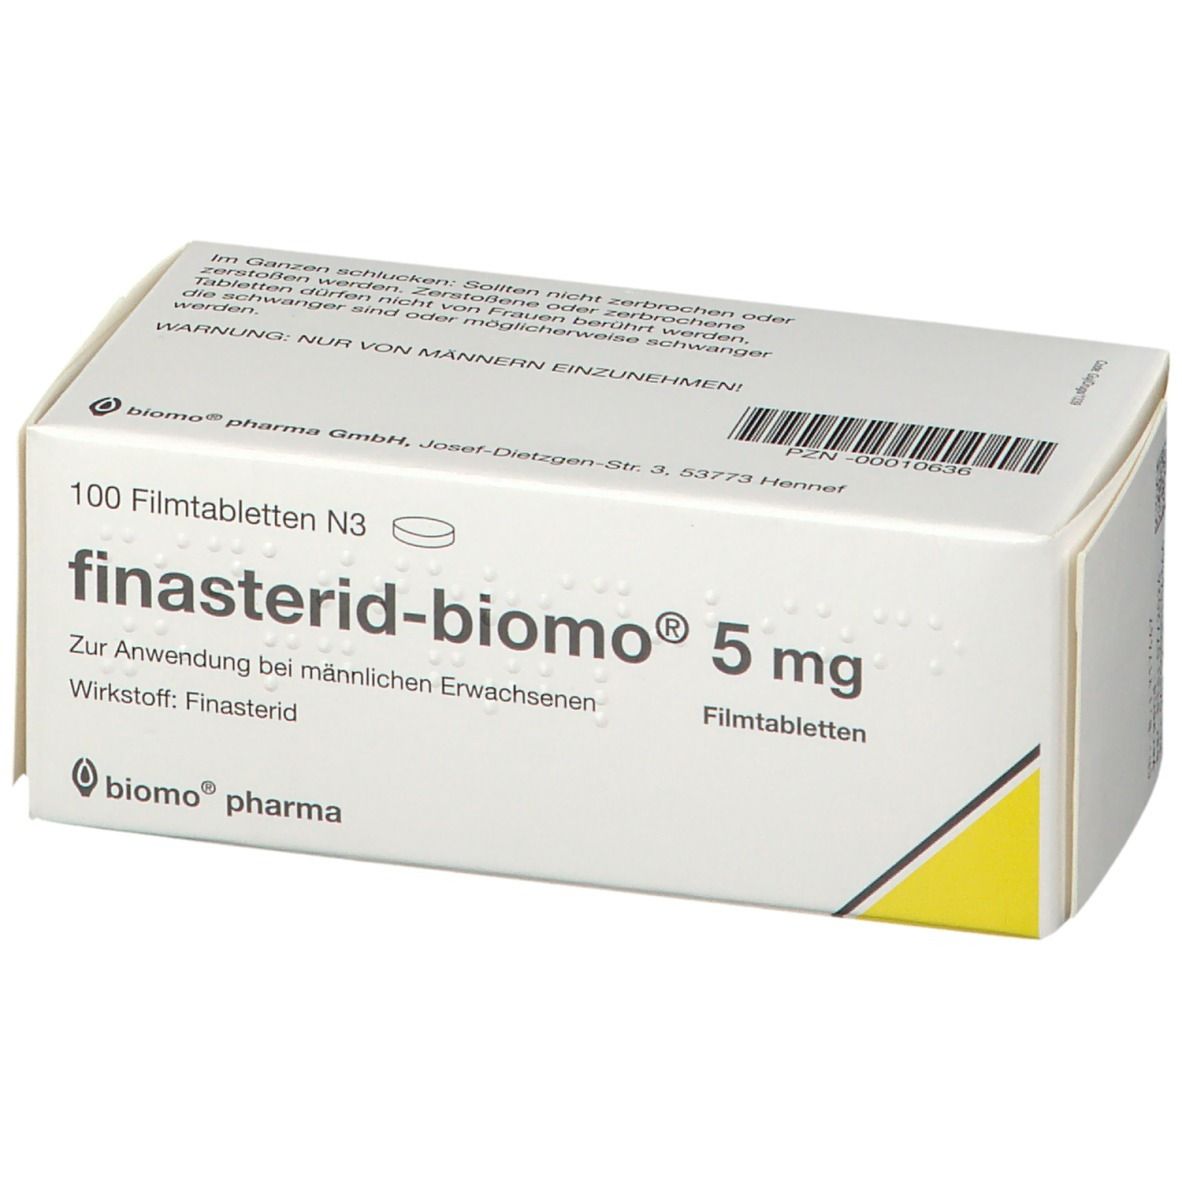 finasterid-biomo® 5 mg